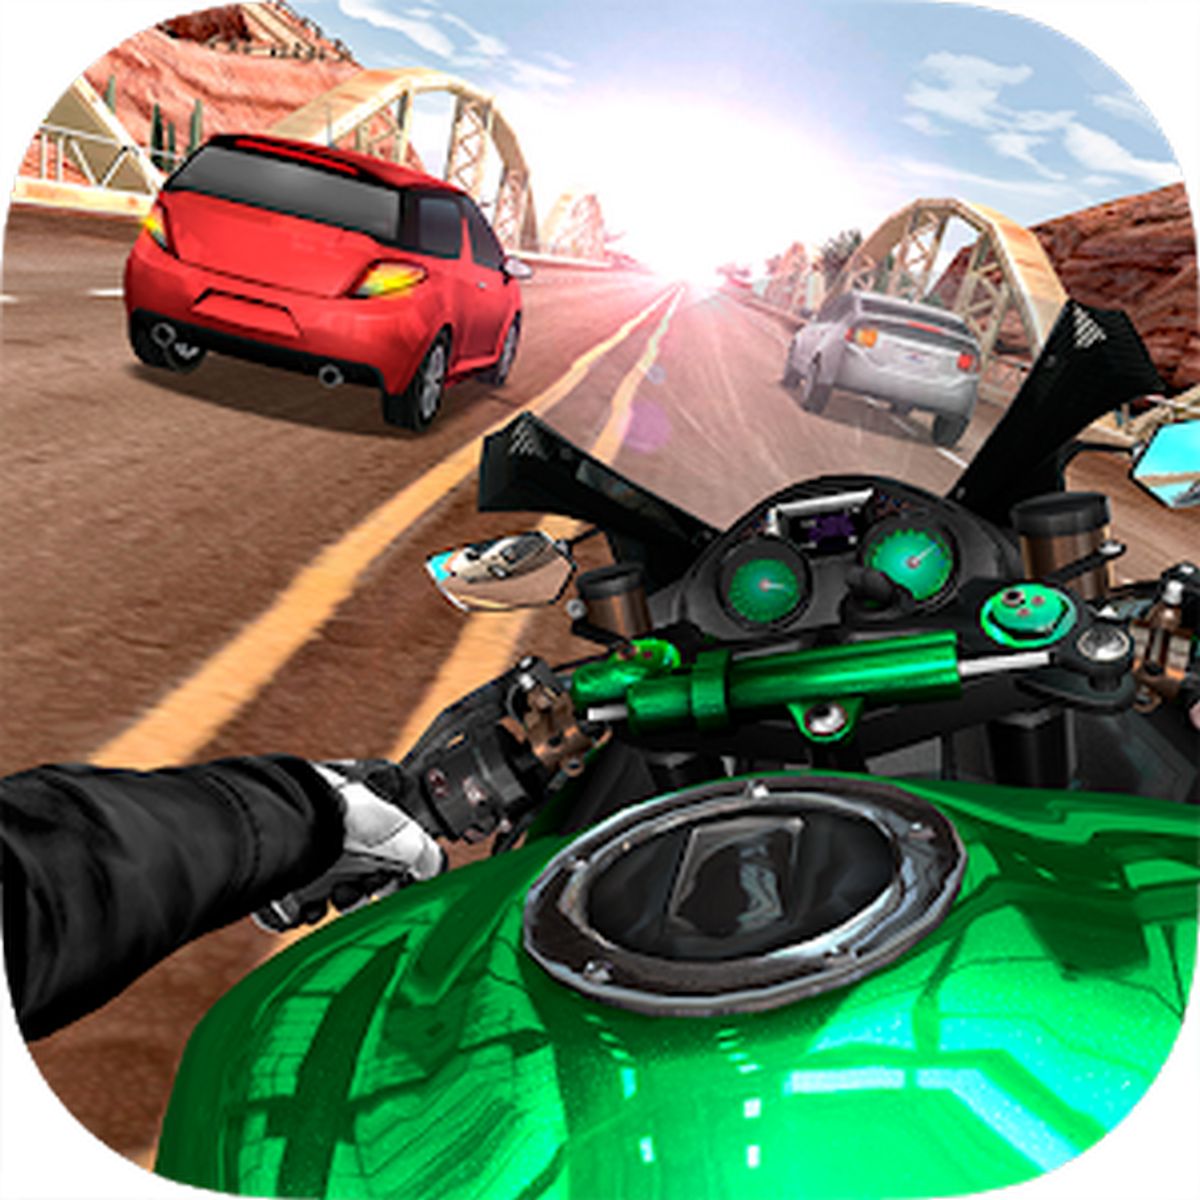 Moto Rider In Traffic